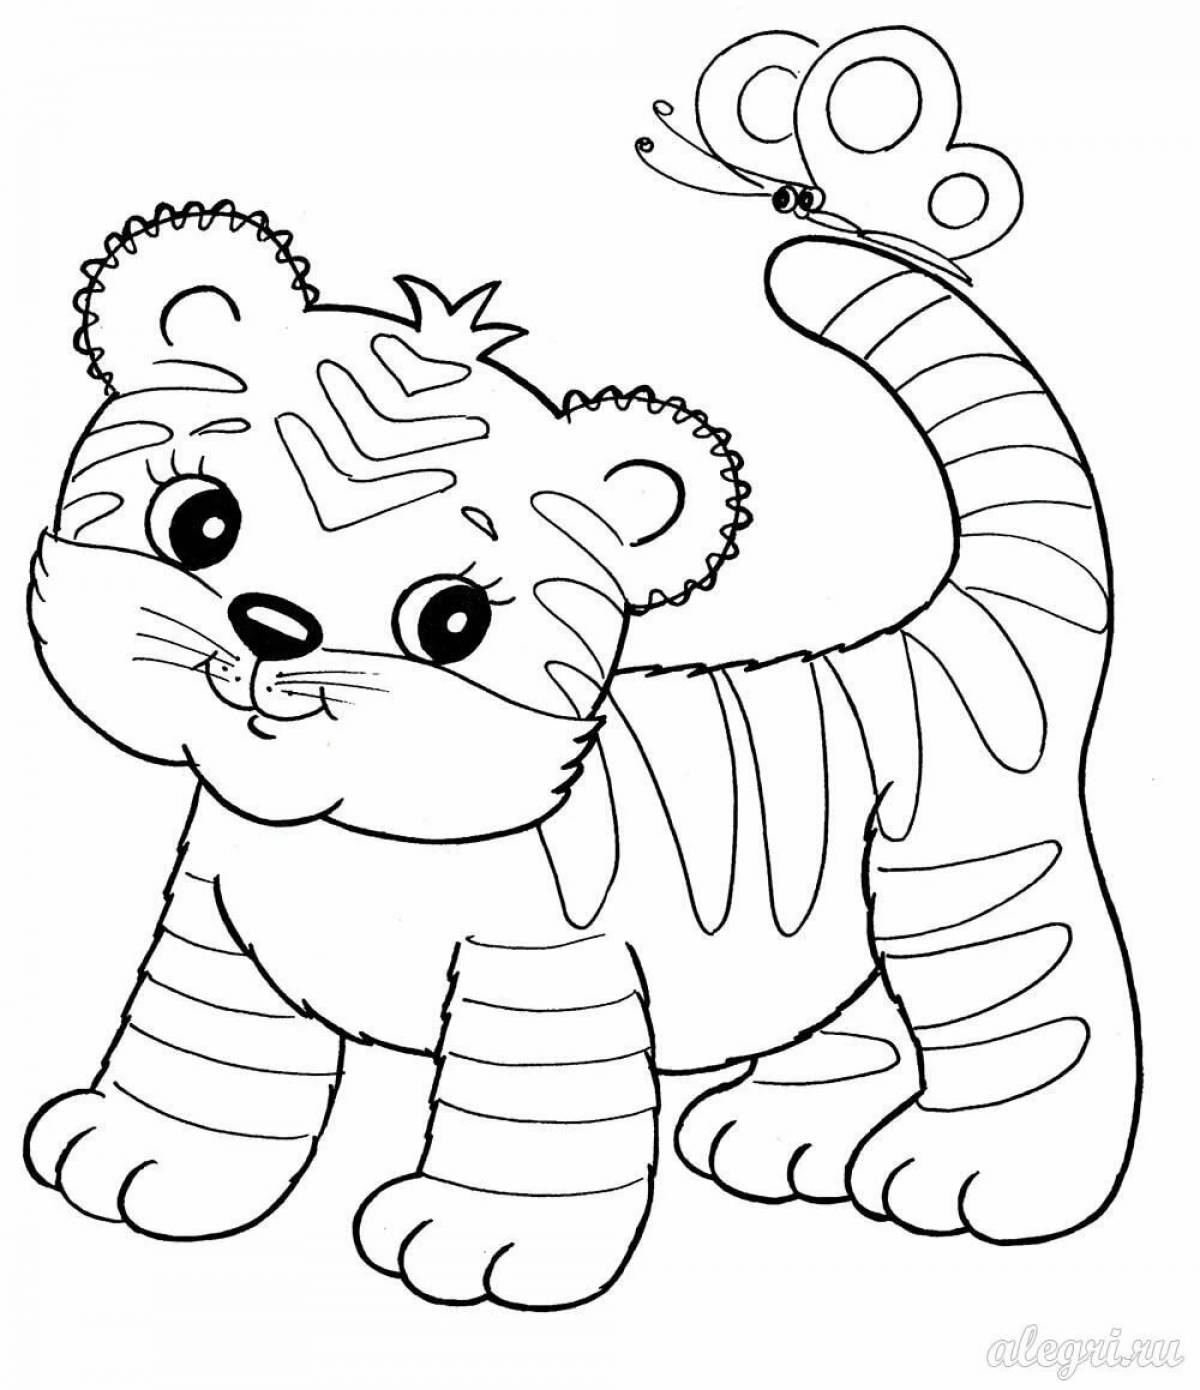 Vibrant tiger cub coloring page